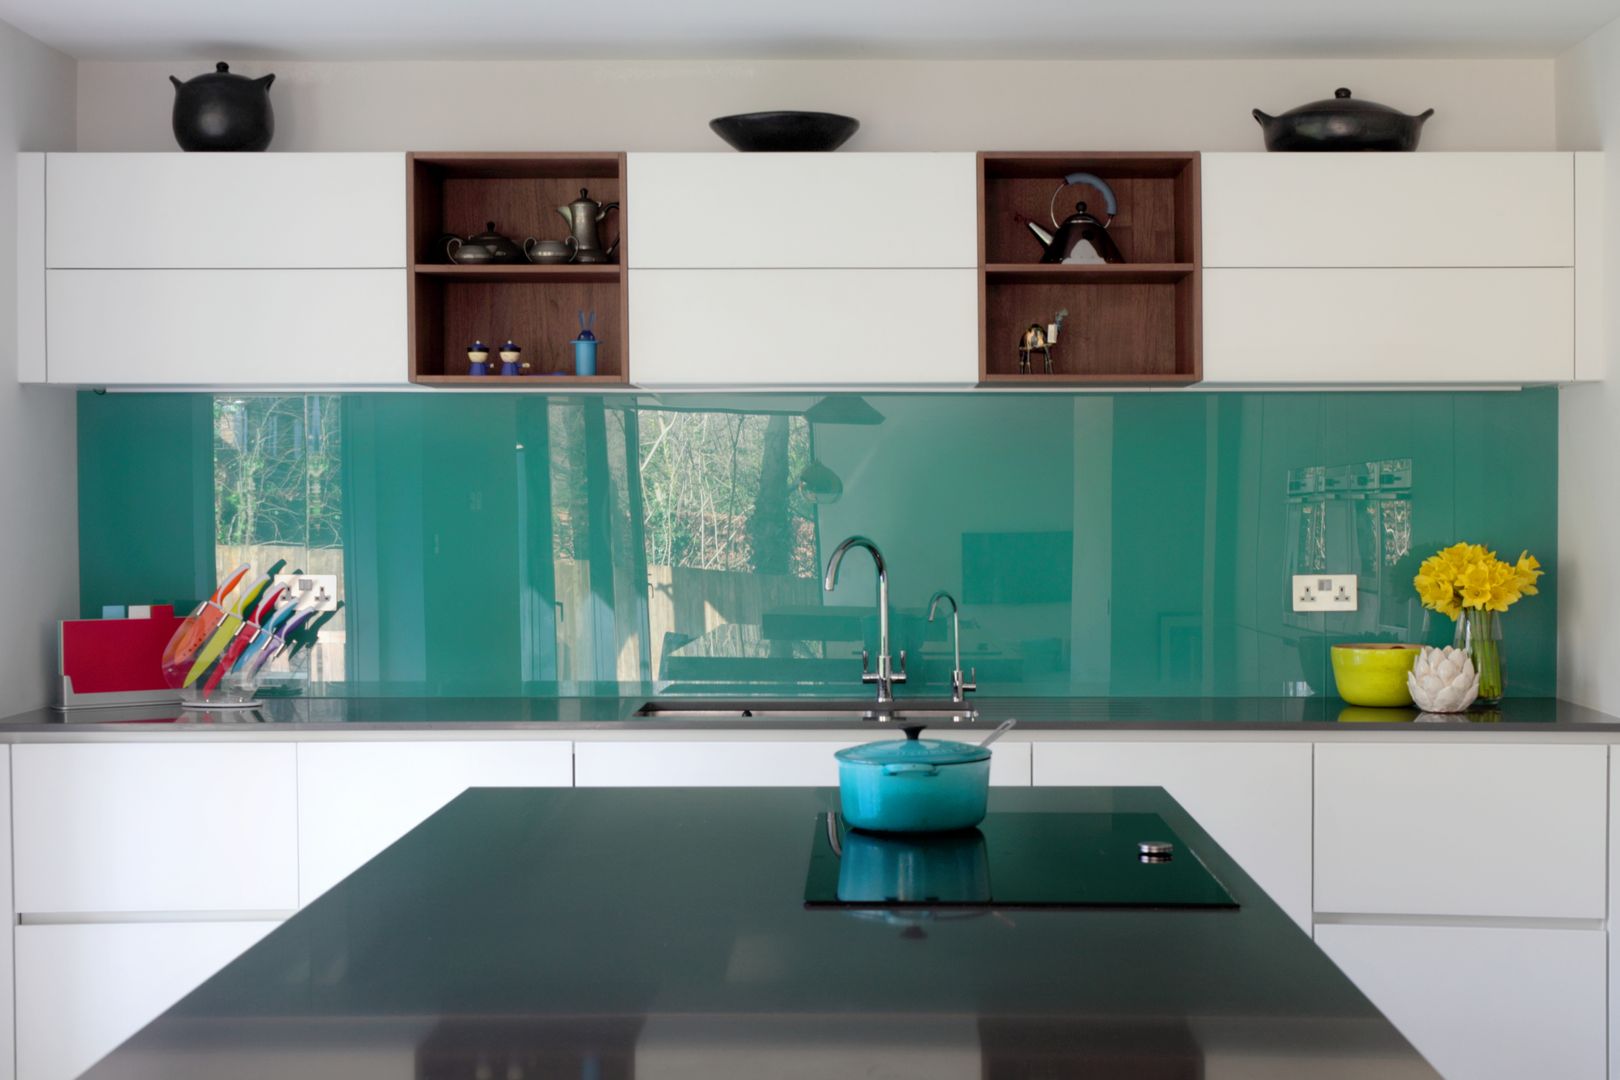 Contemporary Kitchen in Walnut and White Glass in-toto Kitchens Design Studio Marlow Cocinas de estilo moderno